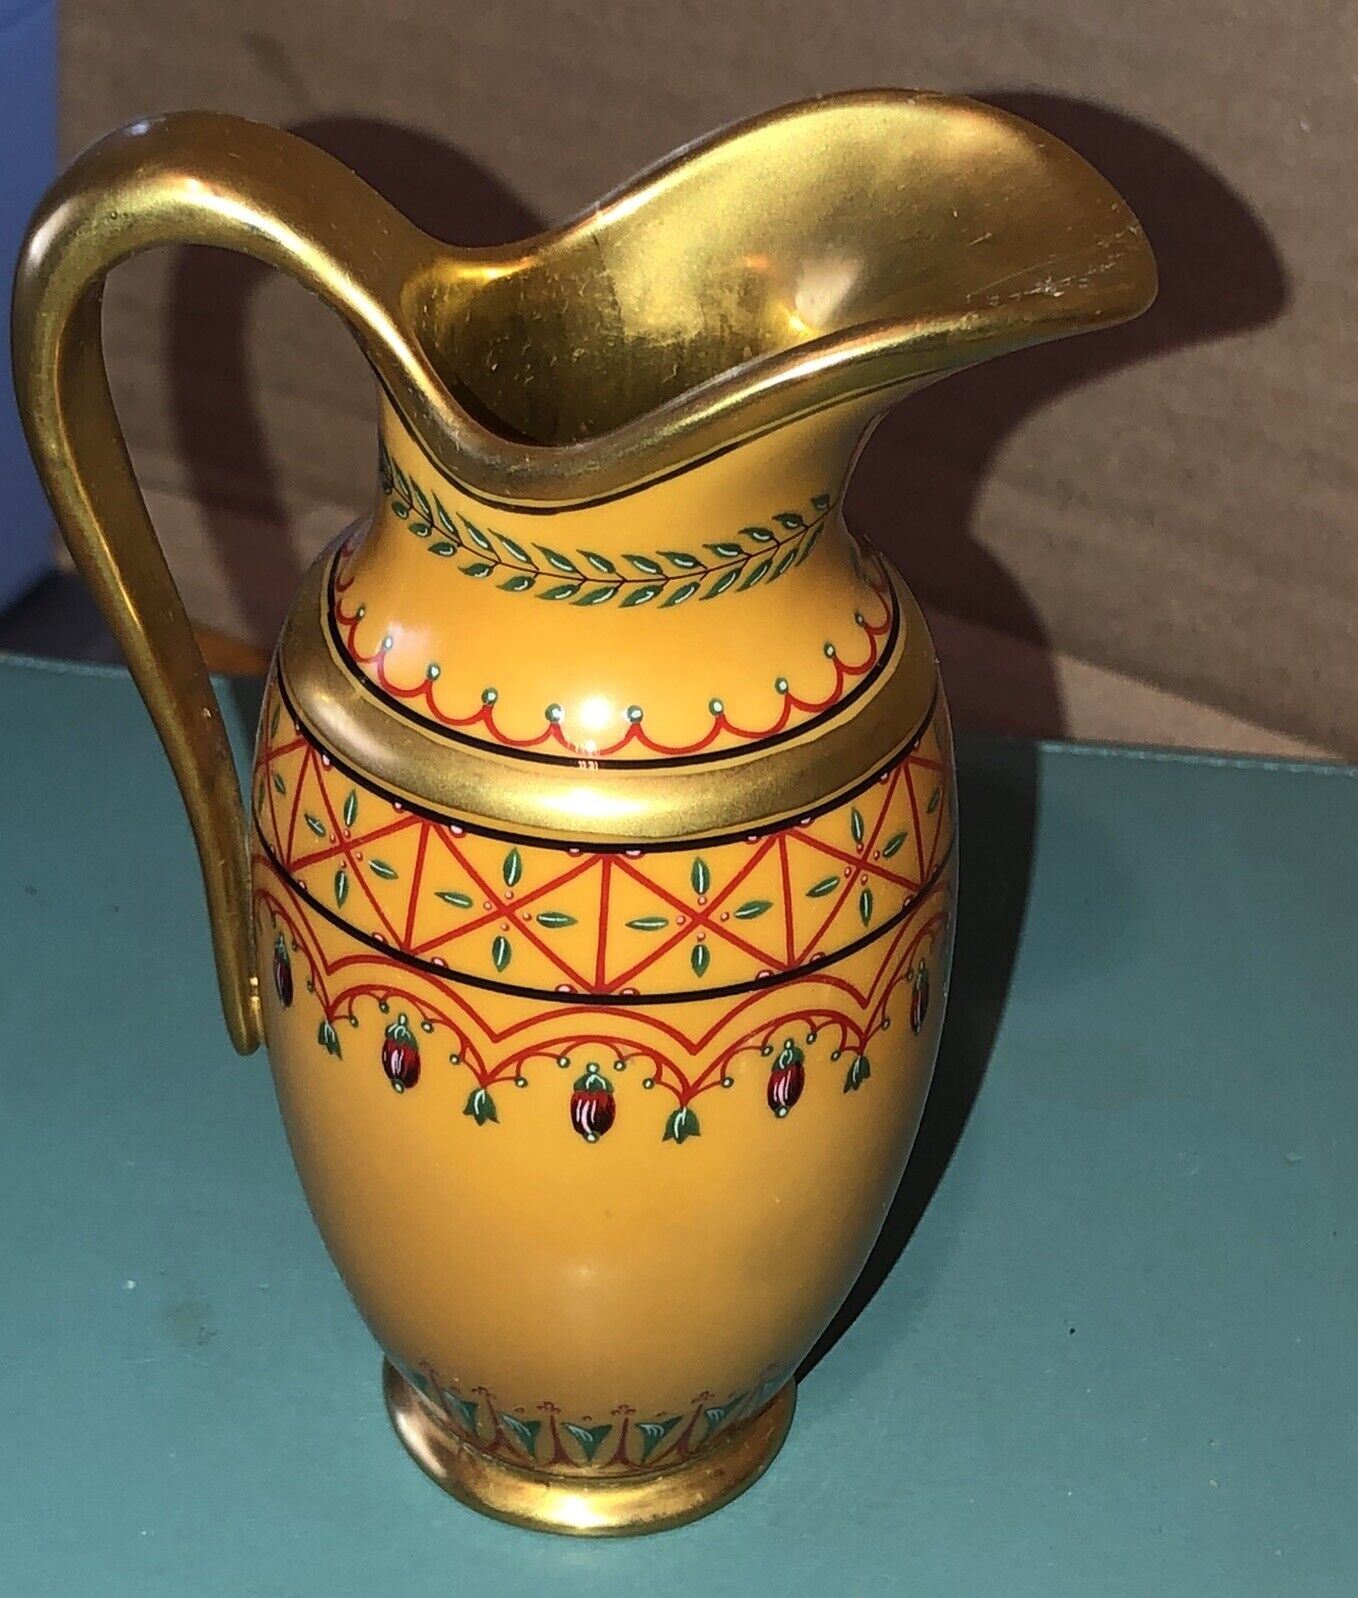 Franklin Mint Museum Replica Ceramic Antique Pitcher 5 1/2”  Orange And Gold ￼#1